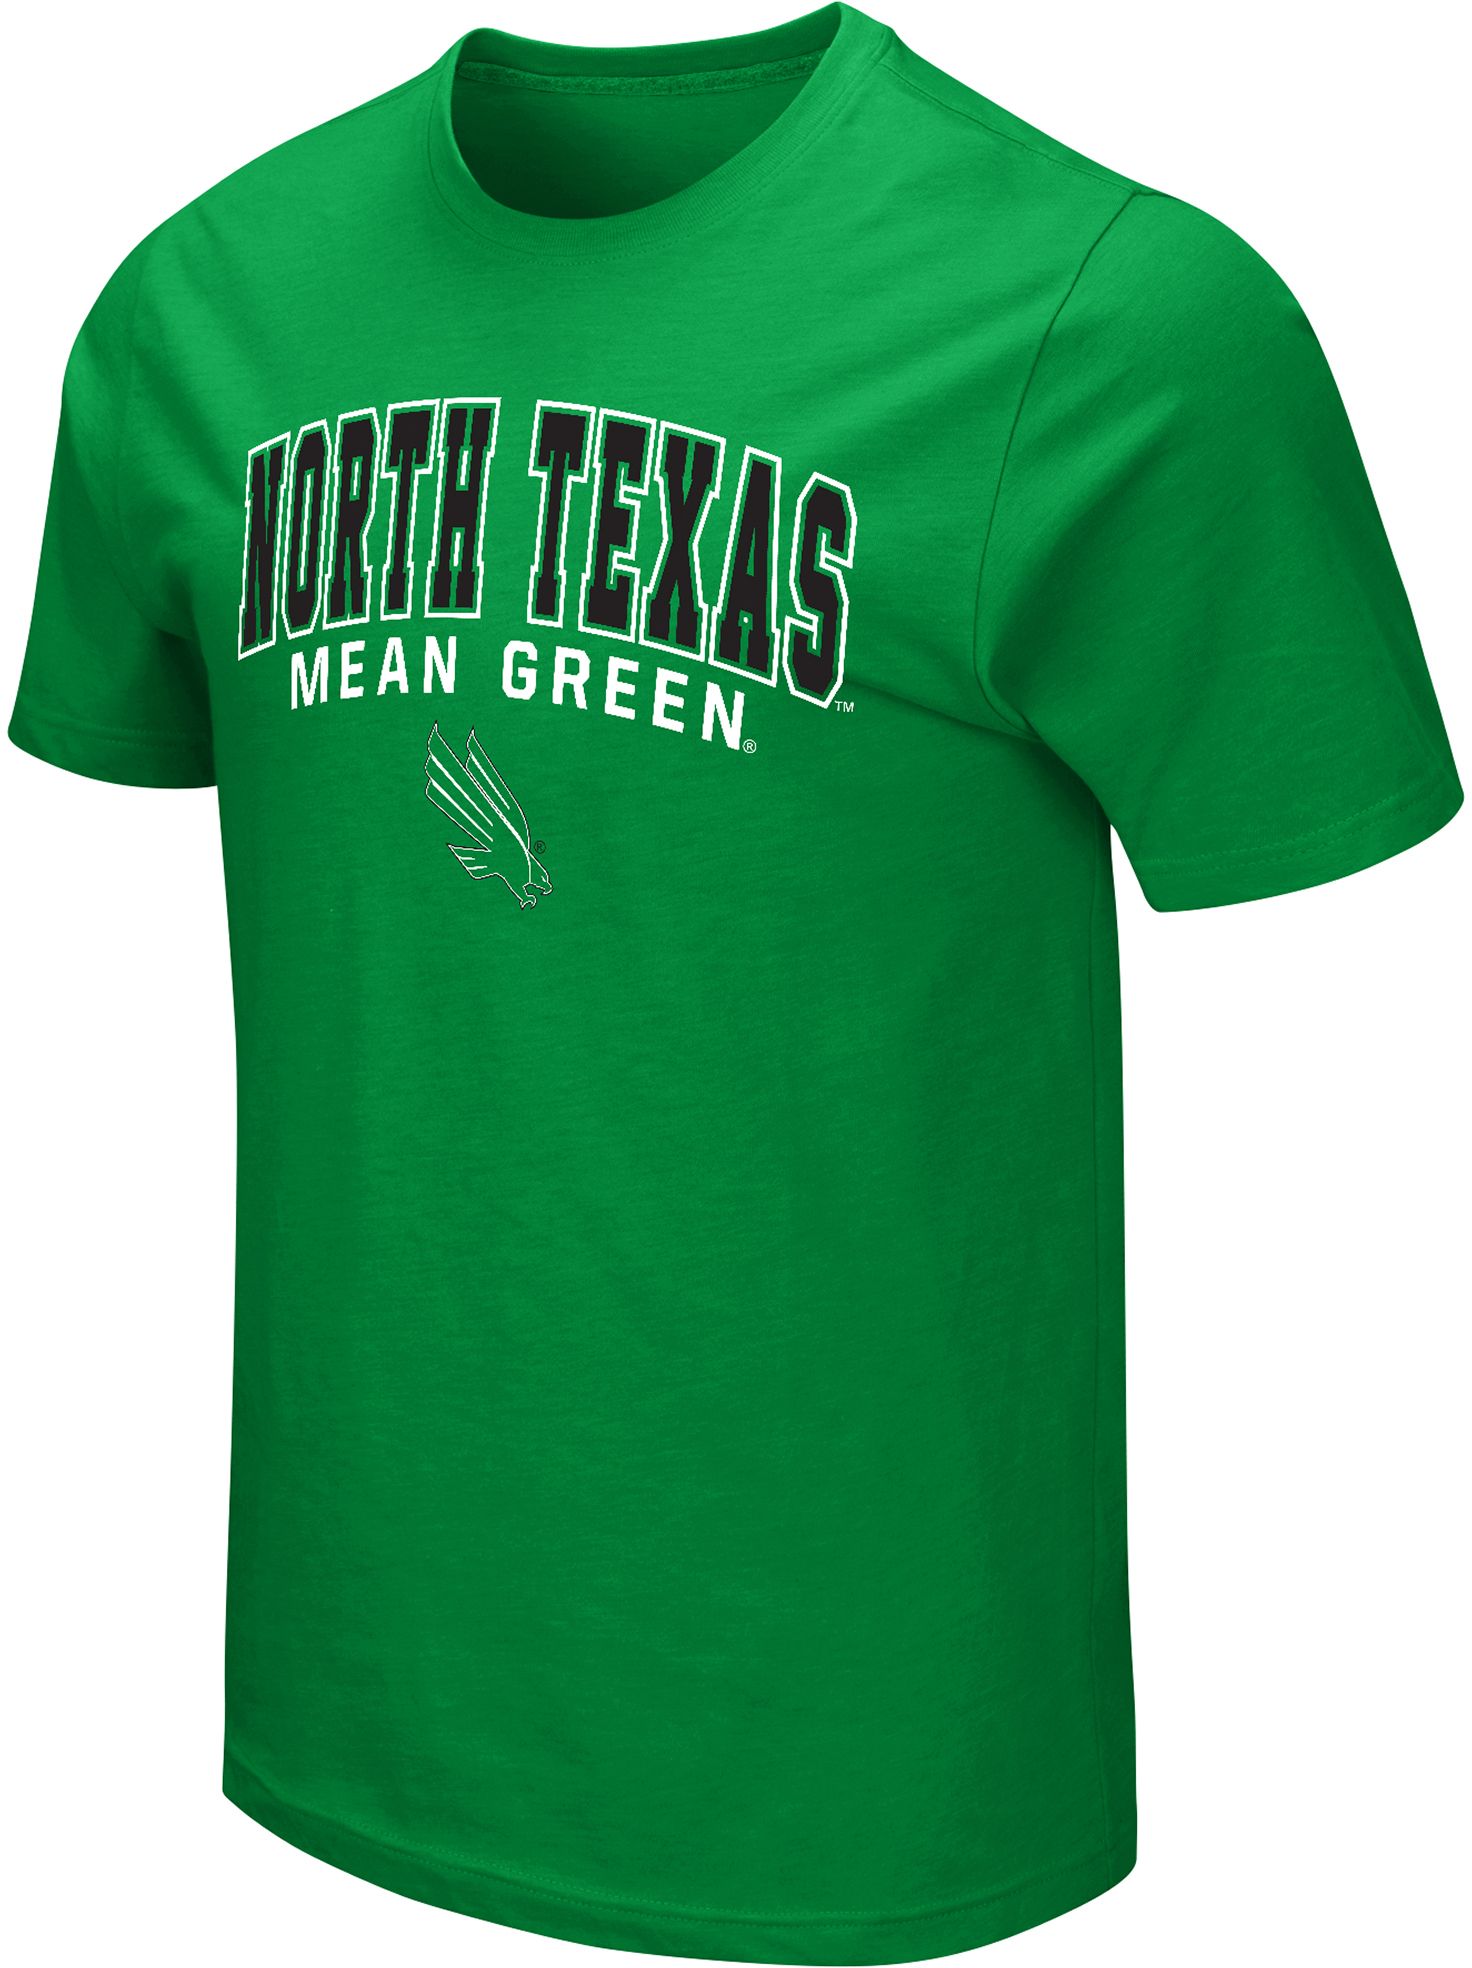 North Texas Mean Green tennis jersey